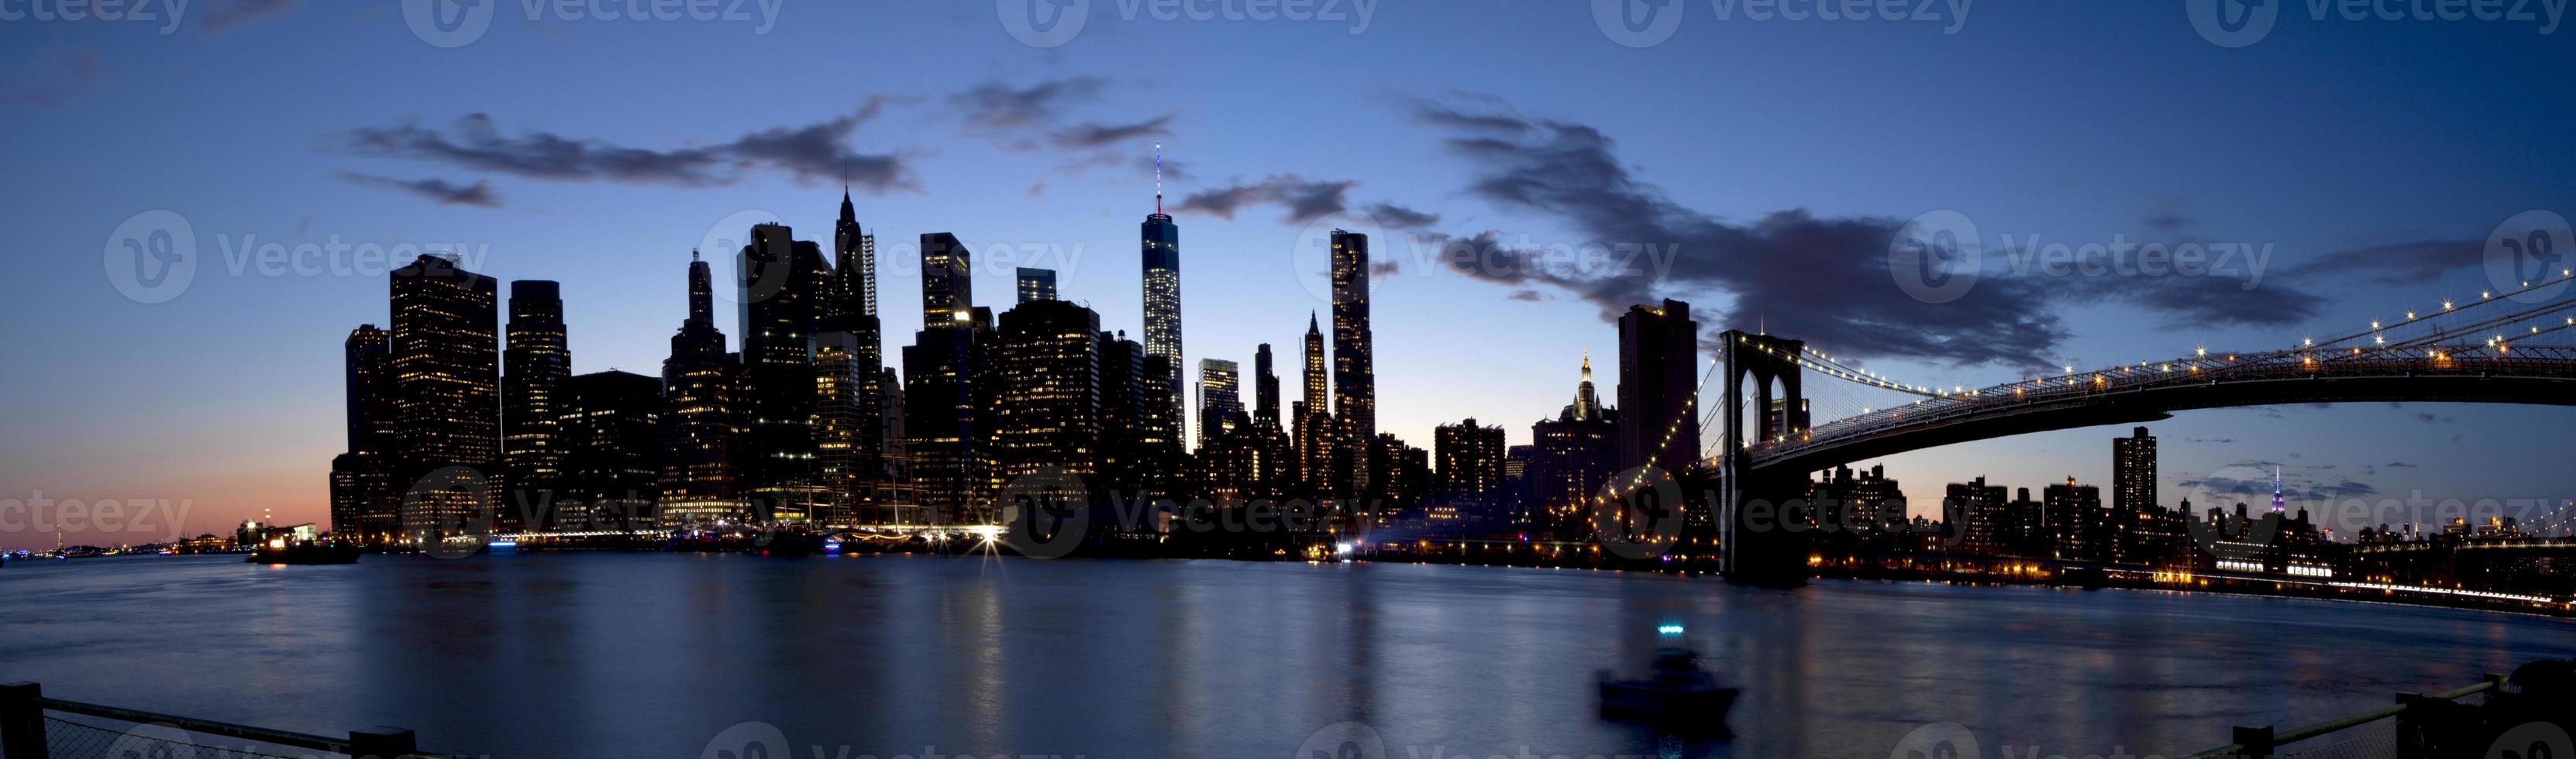 New York City - Lower Manhattan (2014) foto